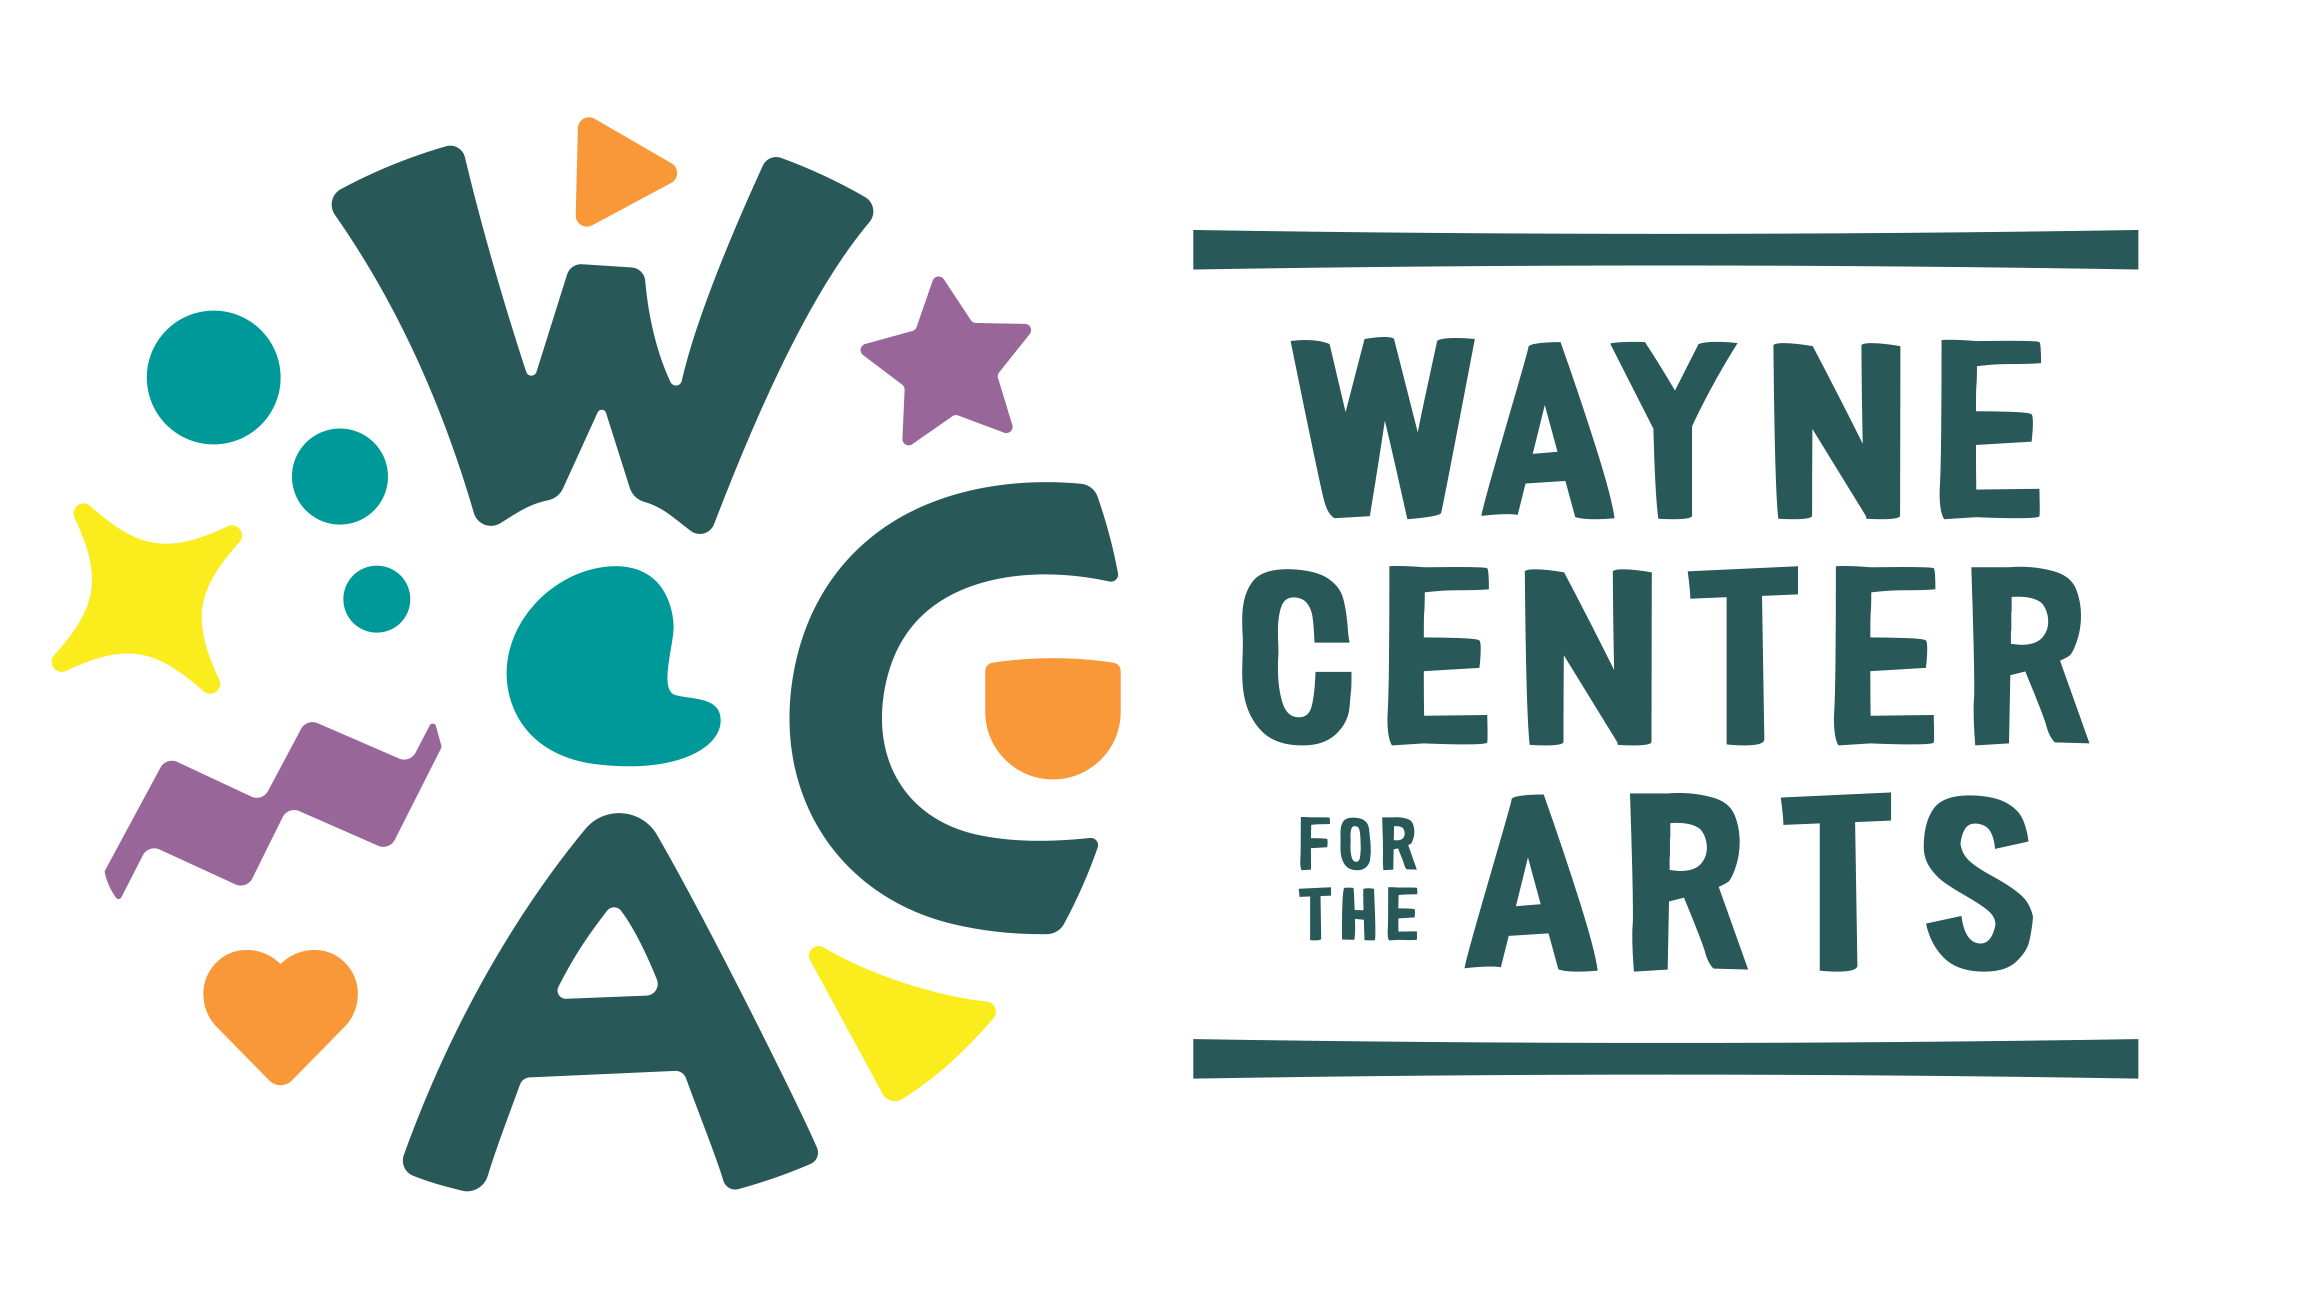 Wayne Center for the Arts